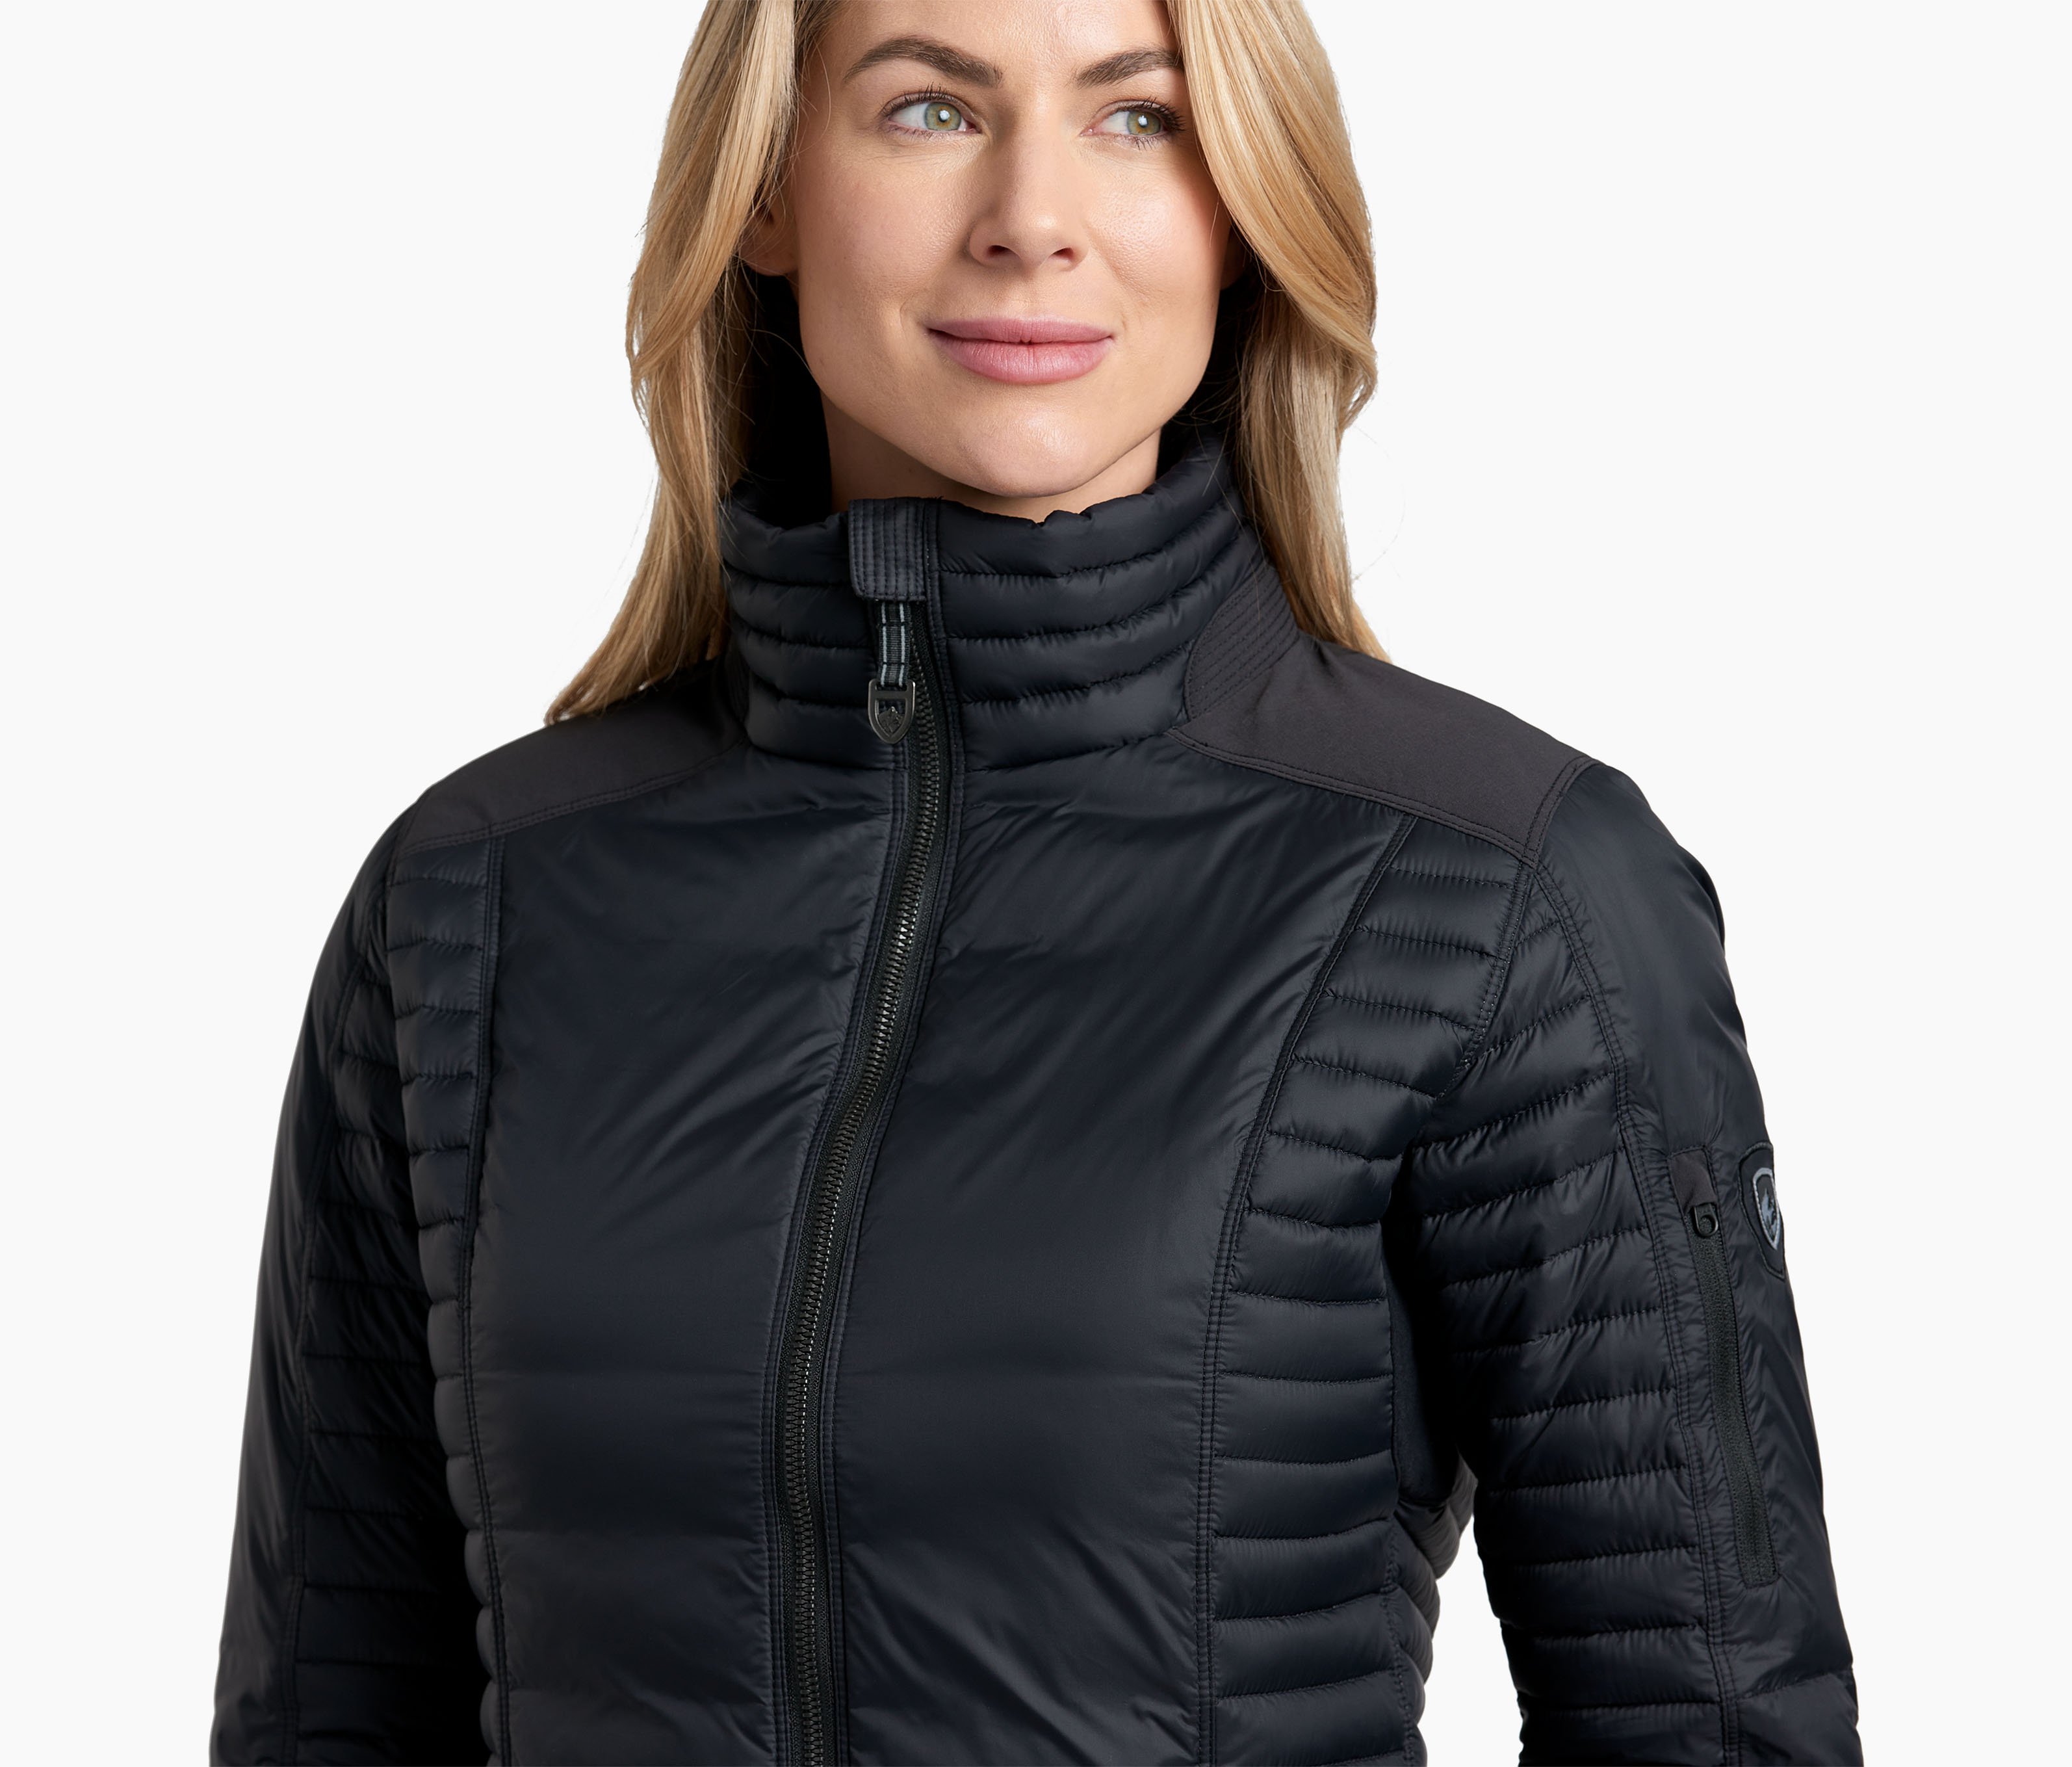 Kuhl Spyfire Hoody Jacket, Size XL - Black for sale online